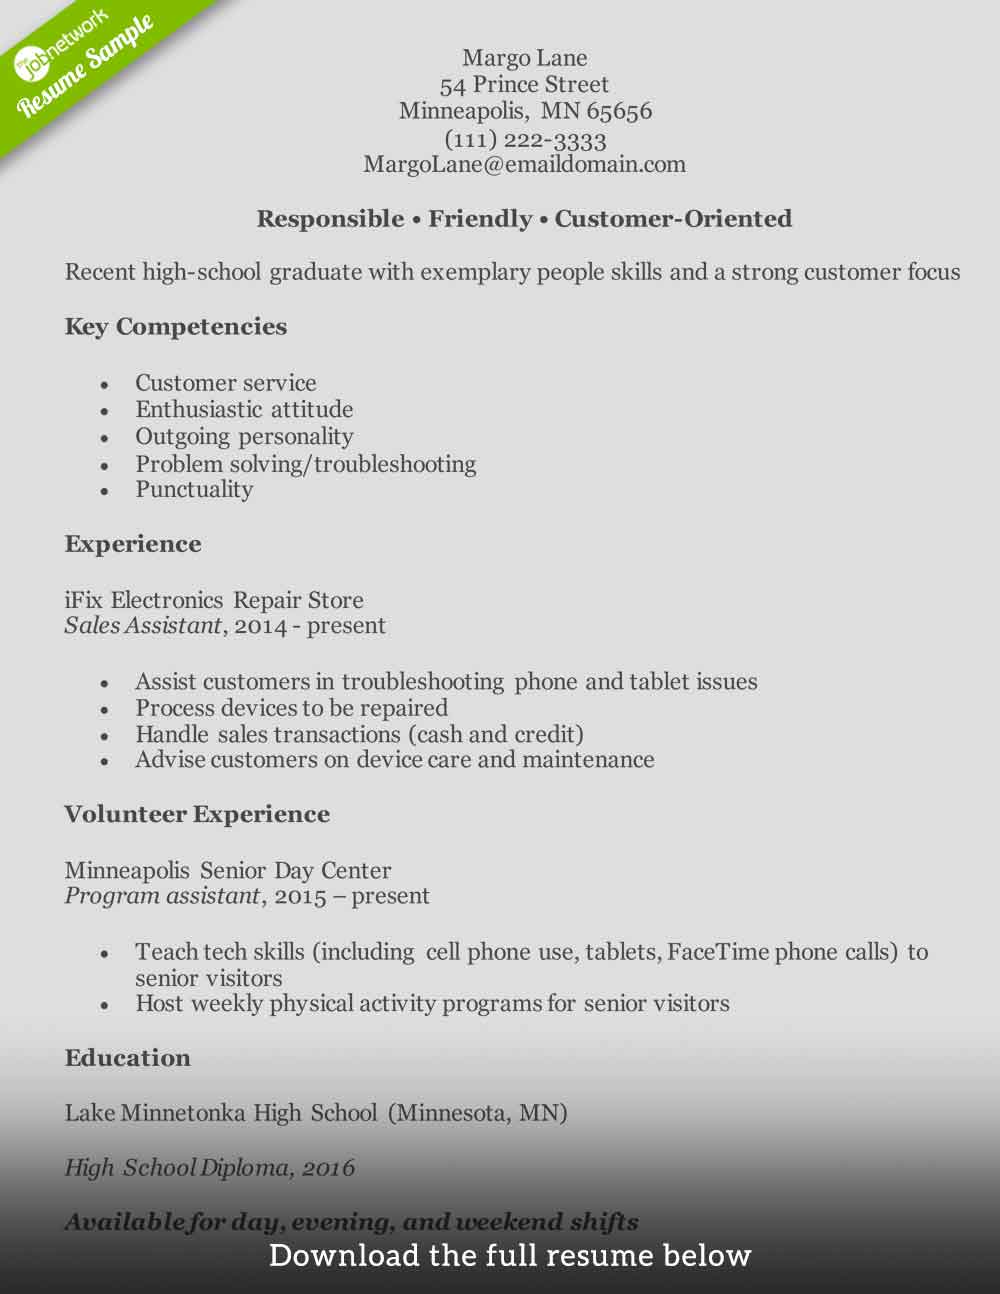 Resume For Customer Service Customer Service Resume Entry Level1 resume for customer service|wikiresume.com